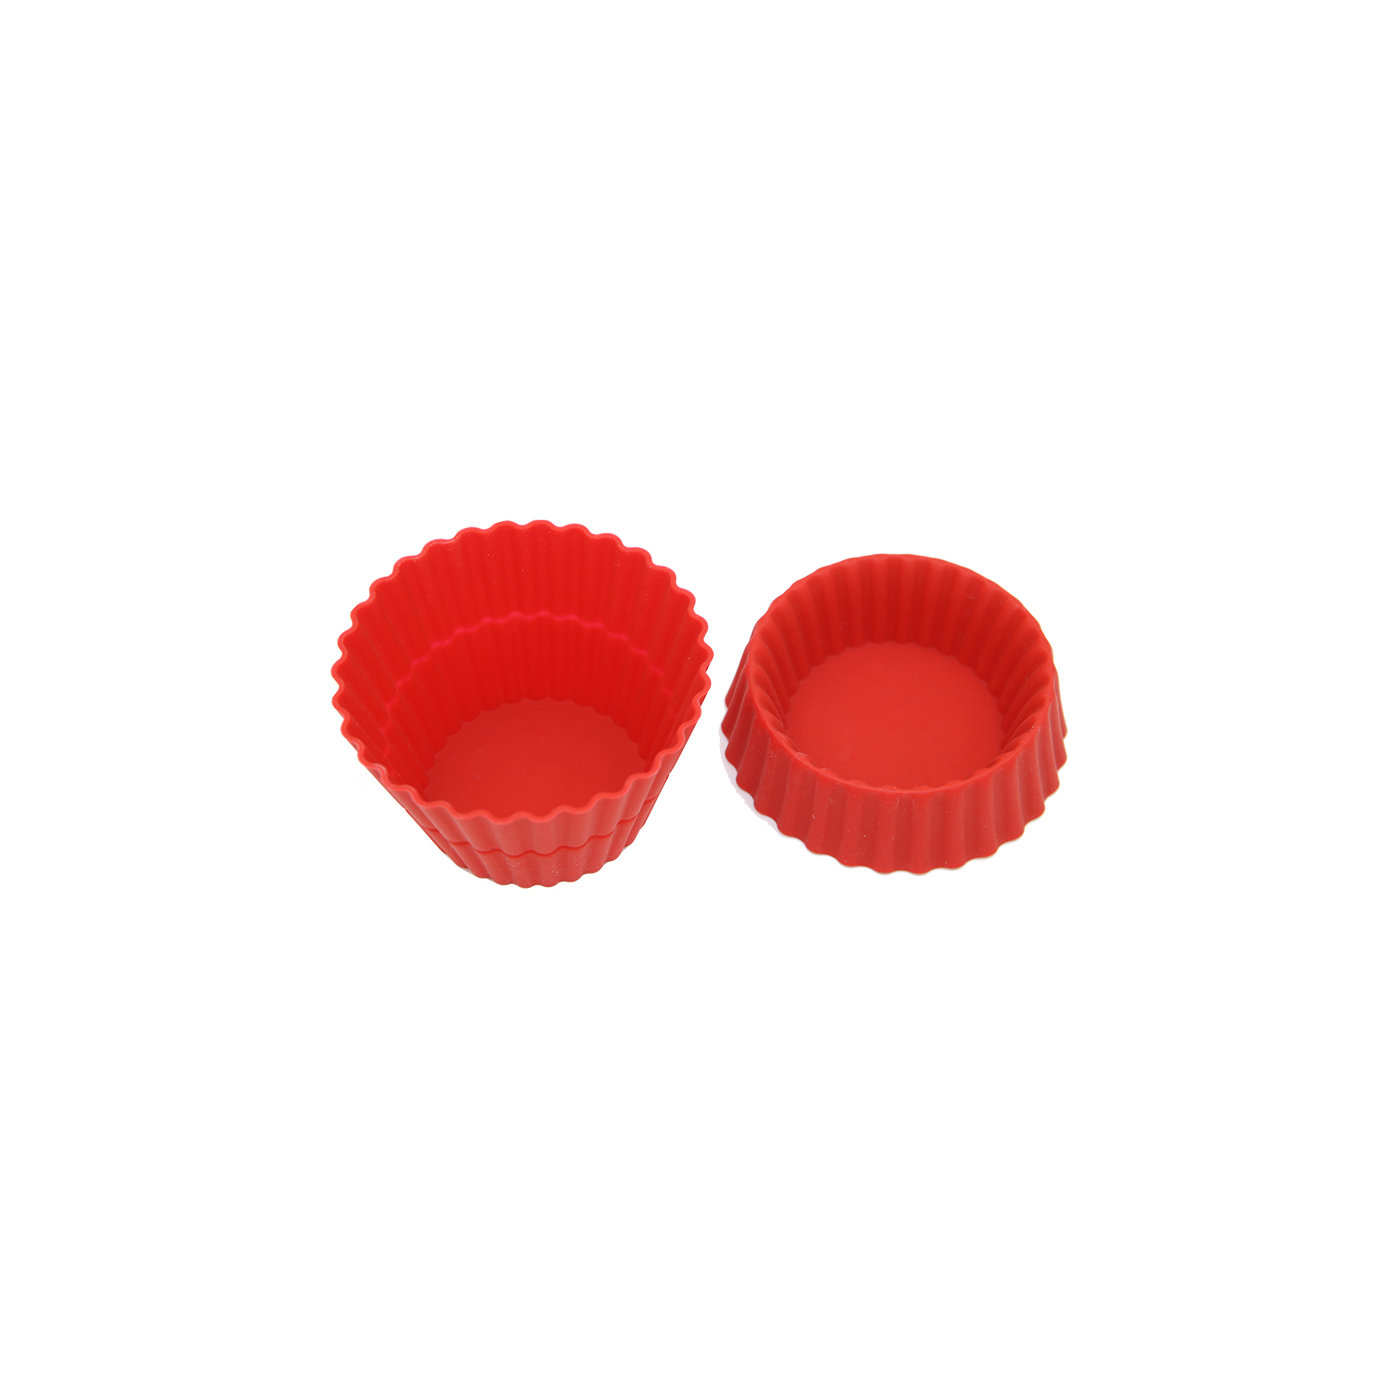 BM087 Faltbare Tassenkuchenform | Silikon-Kuchenform